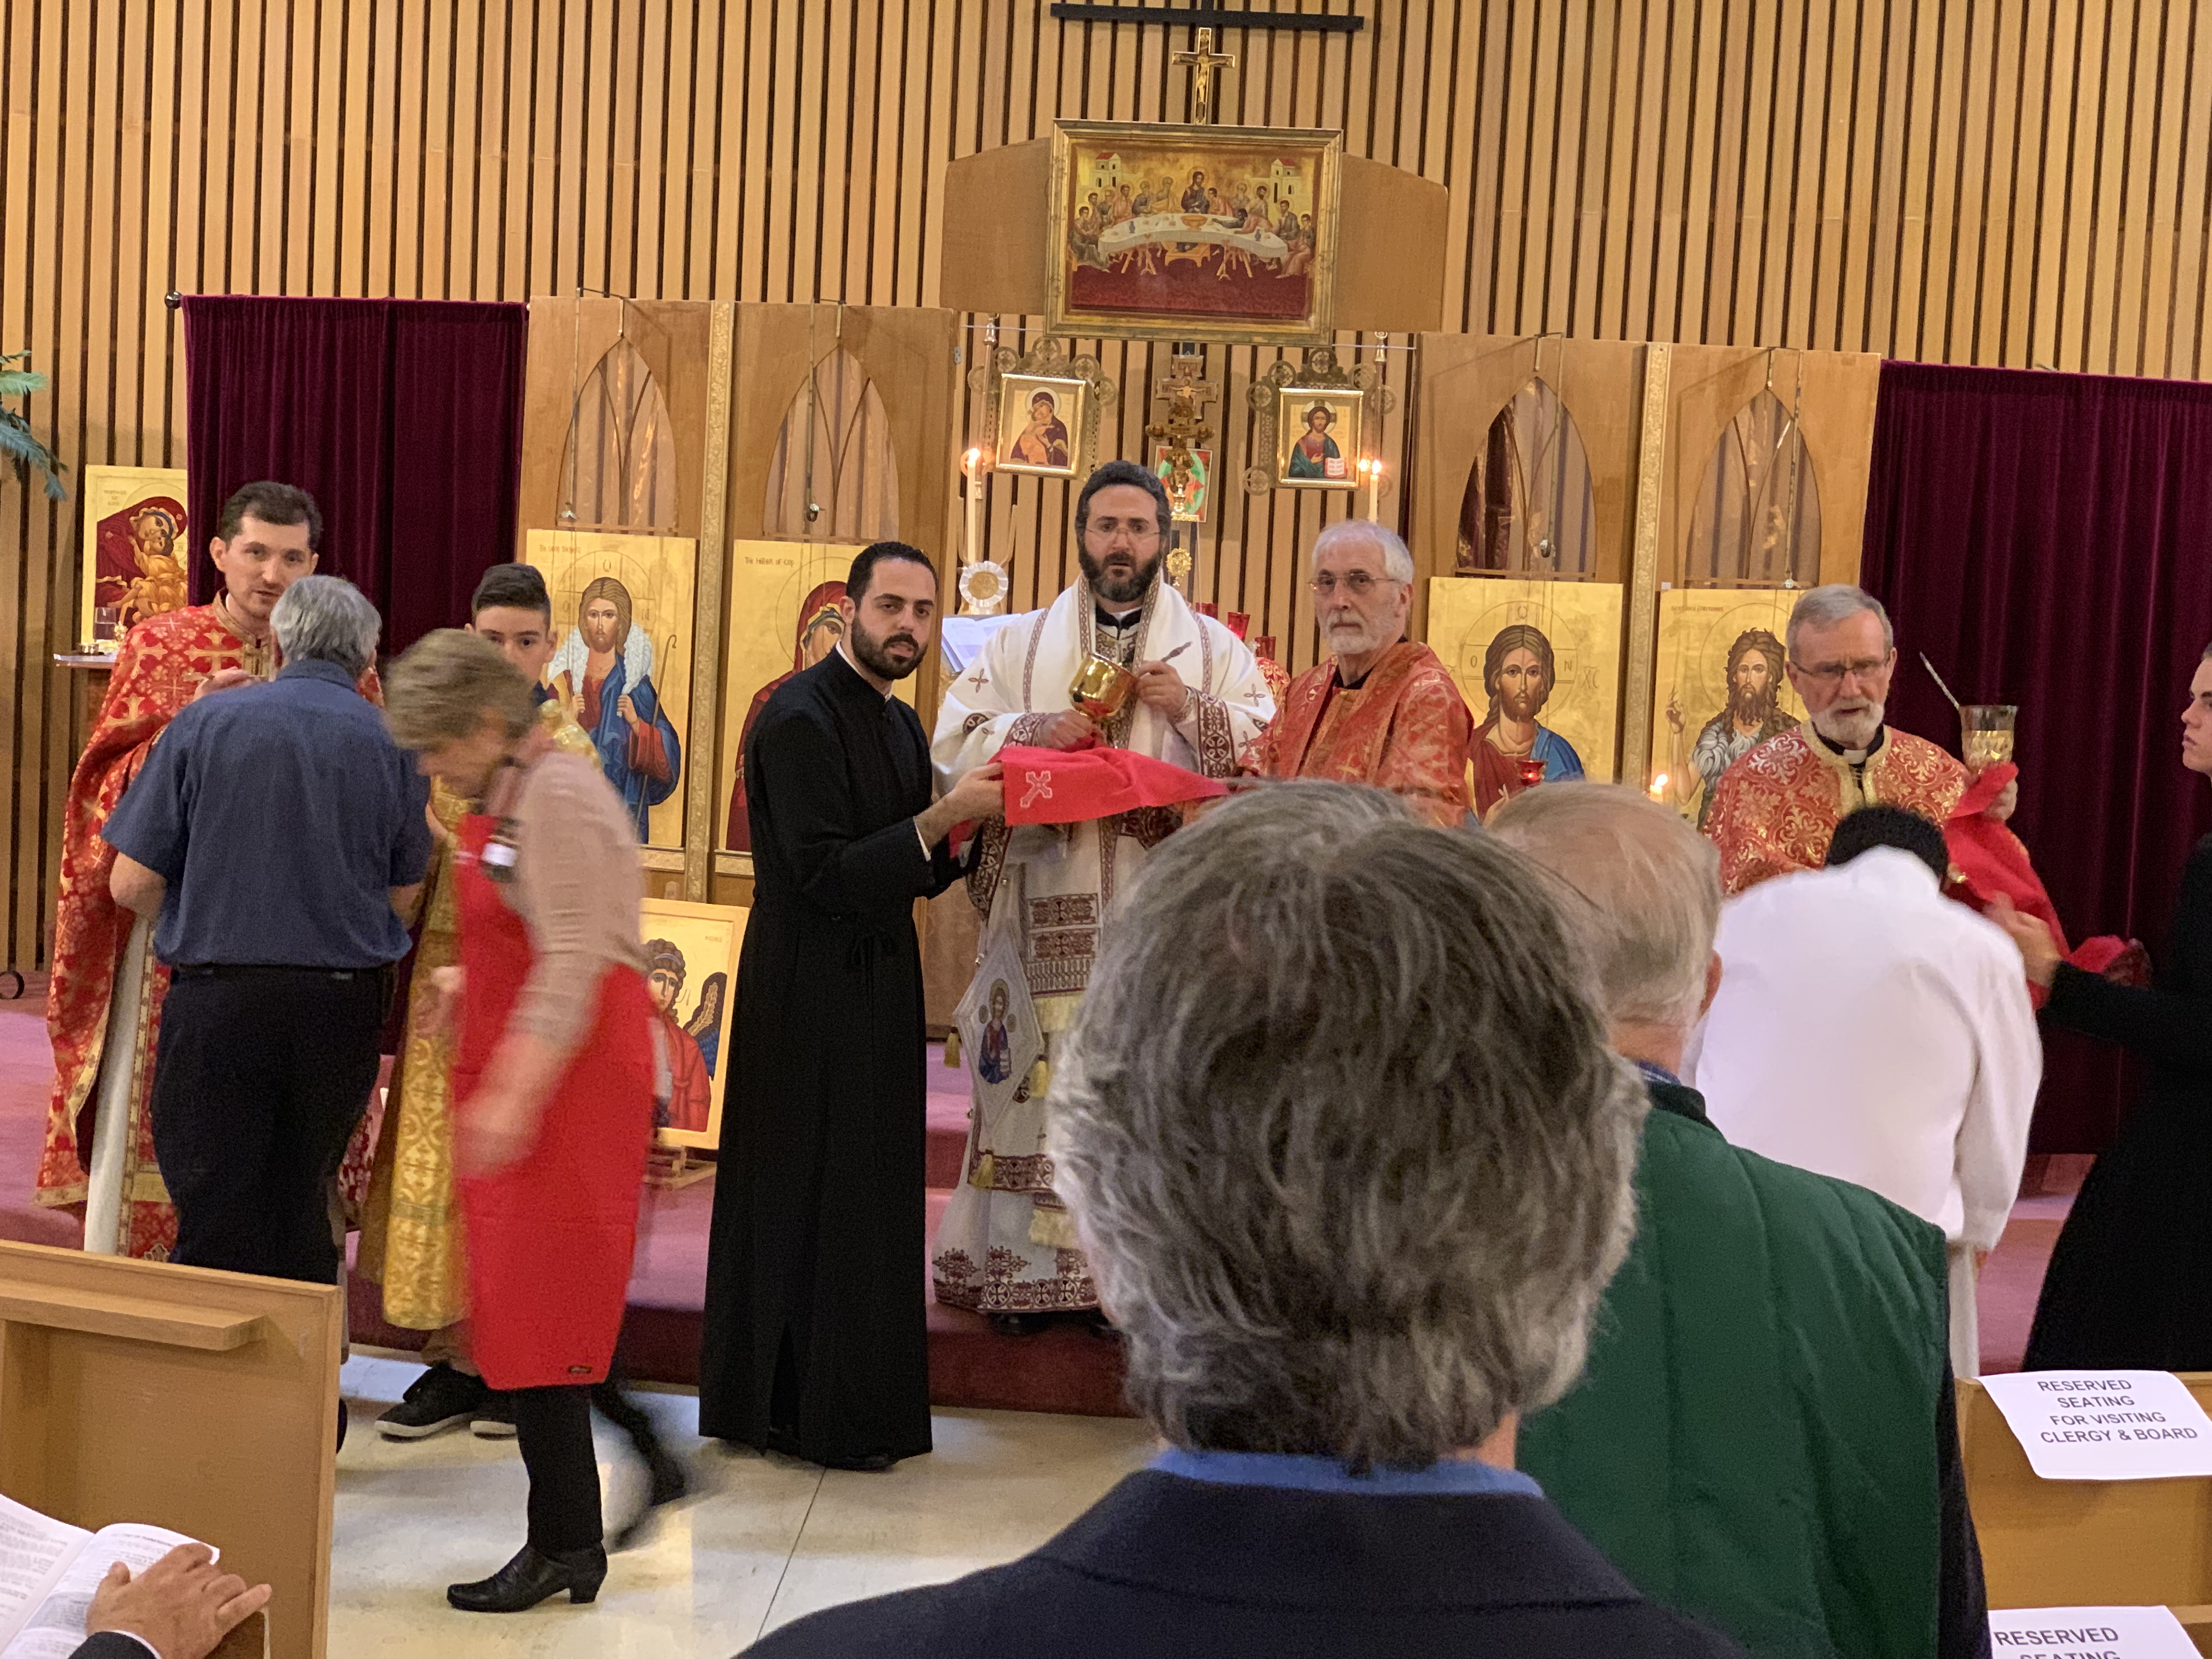 Communion served by Metropolitan Basilios at The Good Shepherd